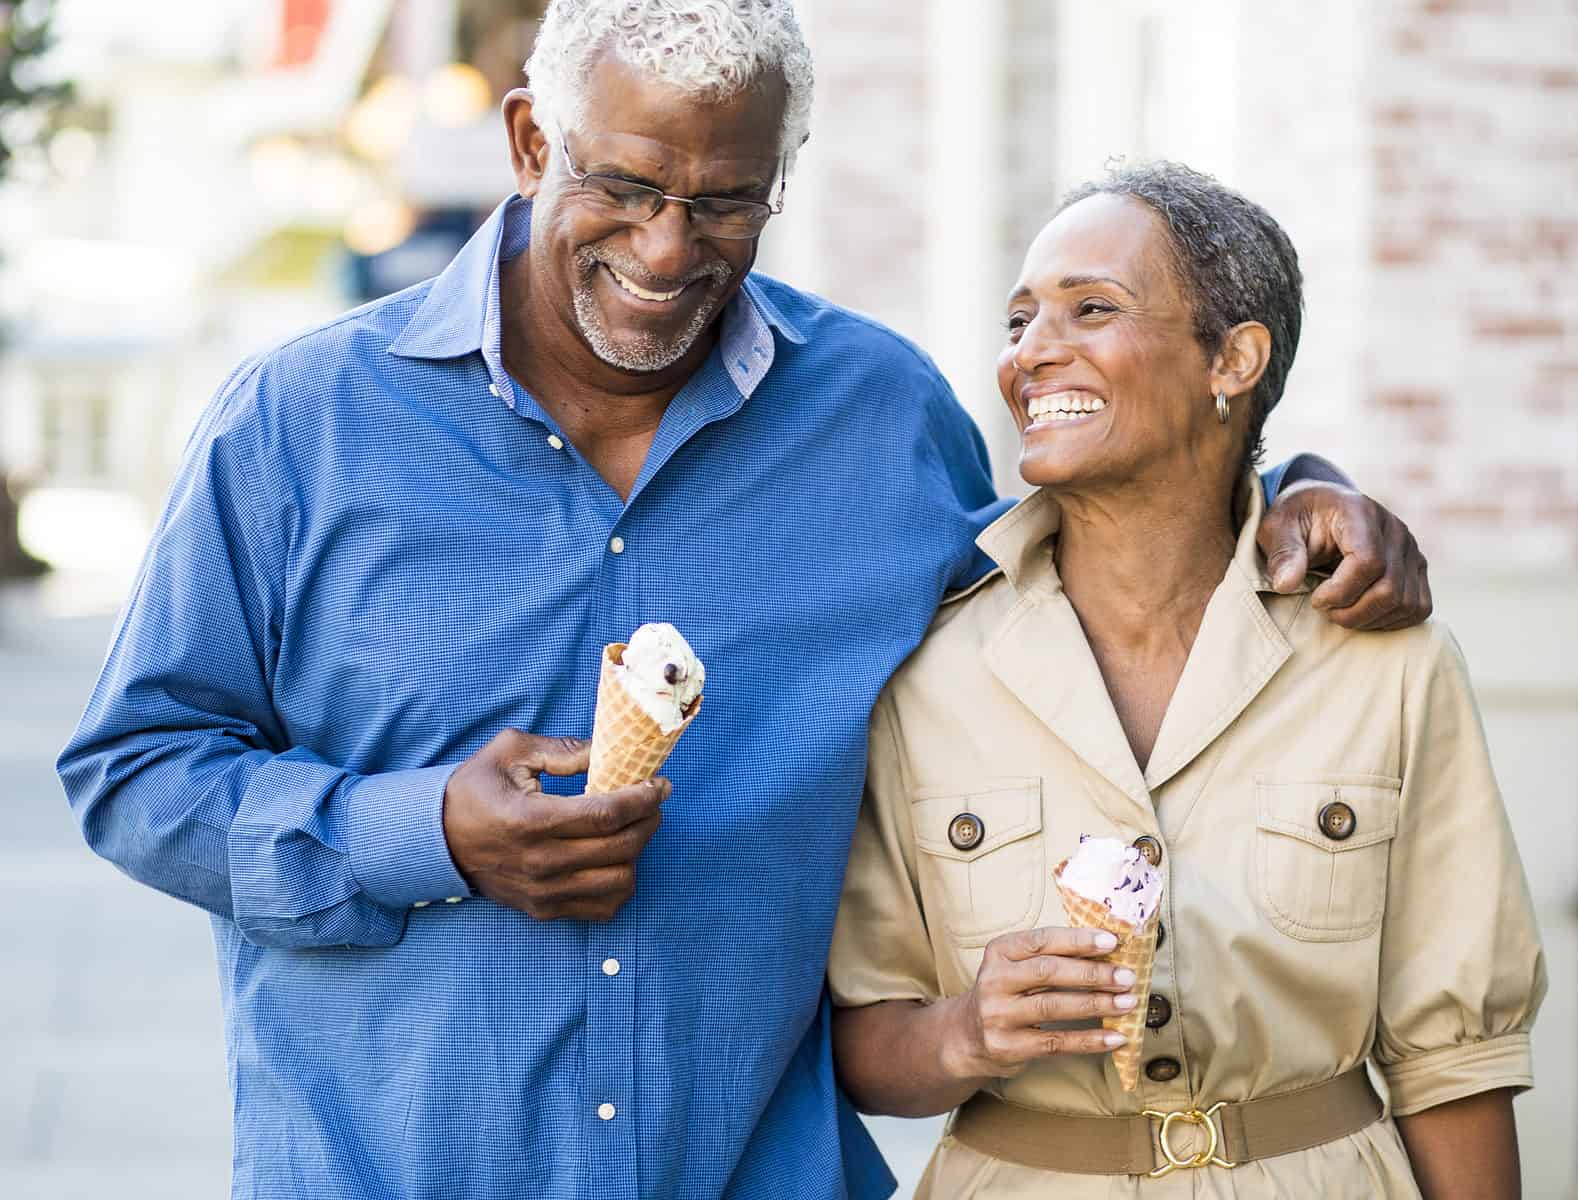 couple-walking-down-street-eating-ice-cream